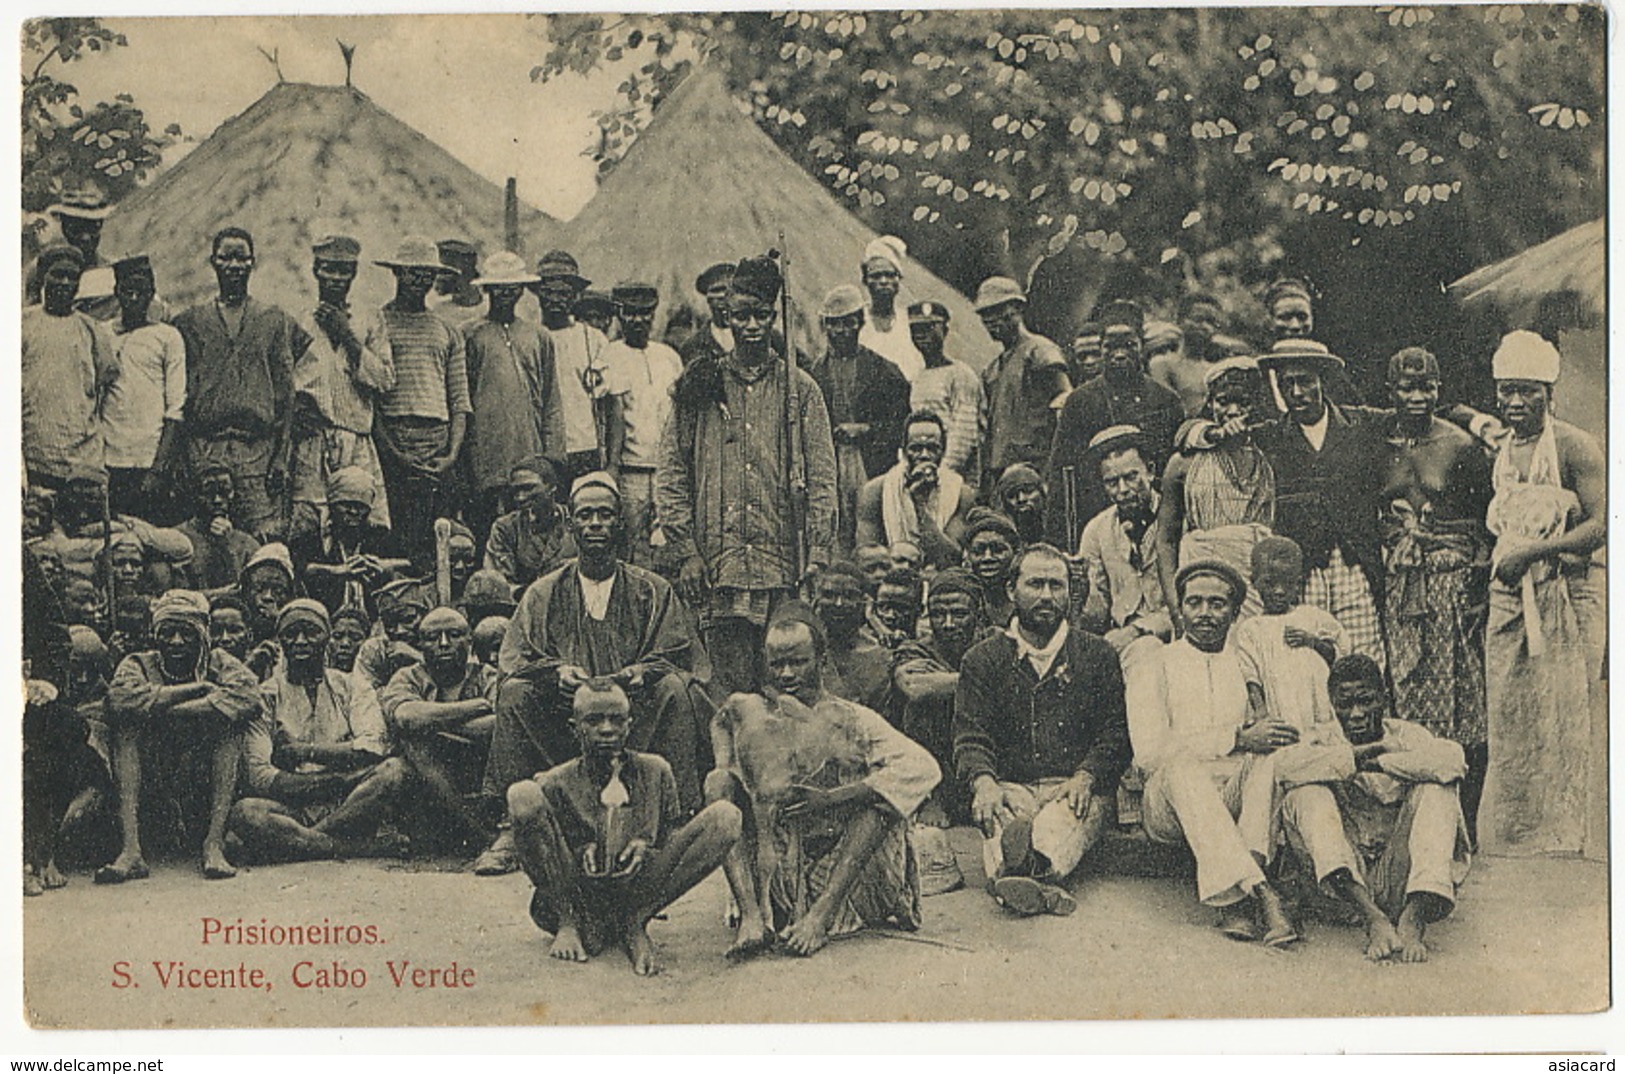 S. Vicente Cabo Verde Prisioneiros  Prisoners - Cap Verde